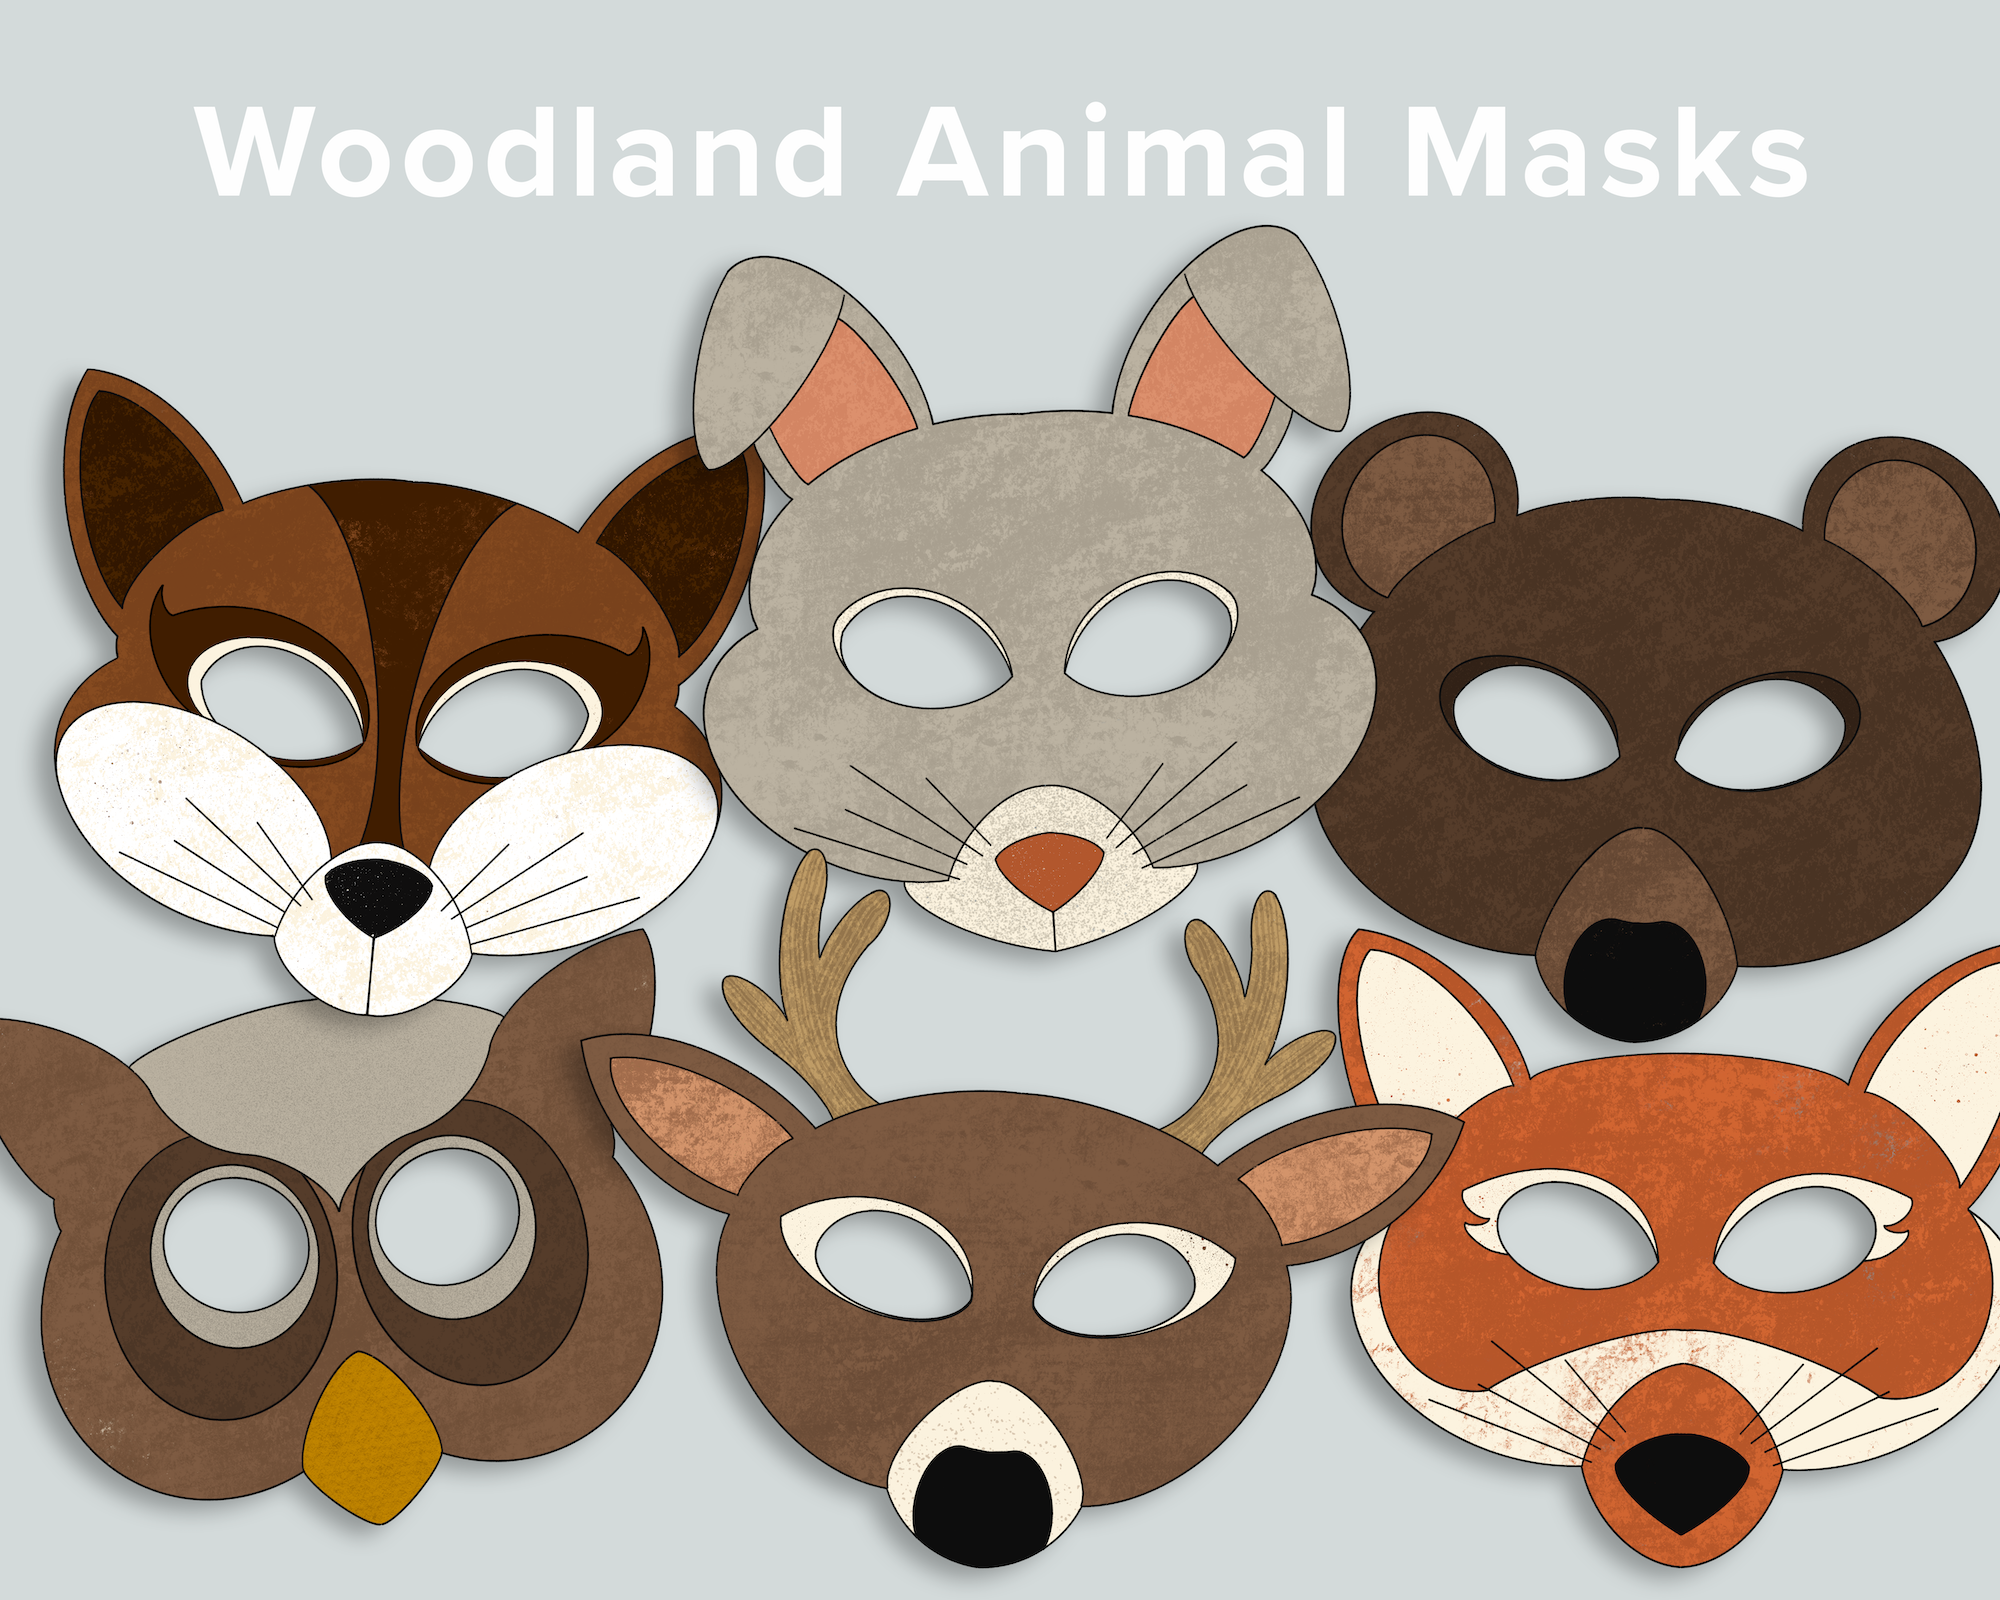 Animal mask workshop  Animal masks, Animal masks for kids, Animal